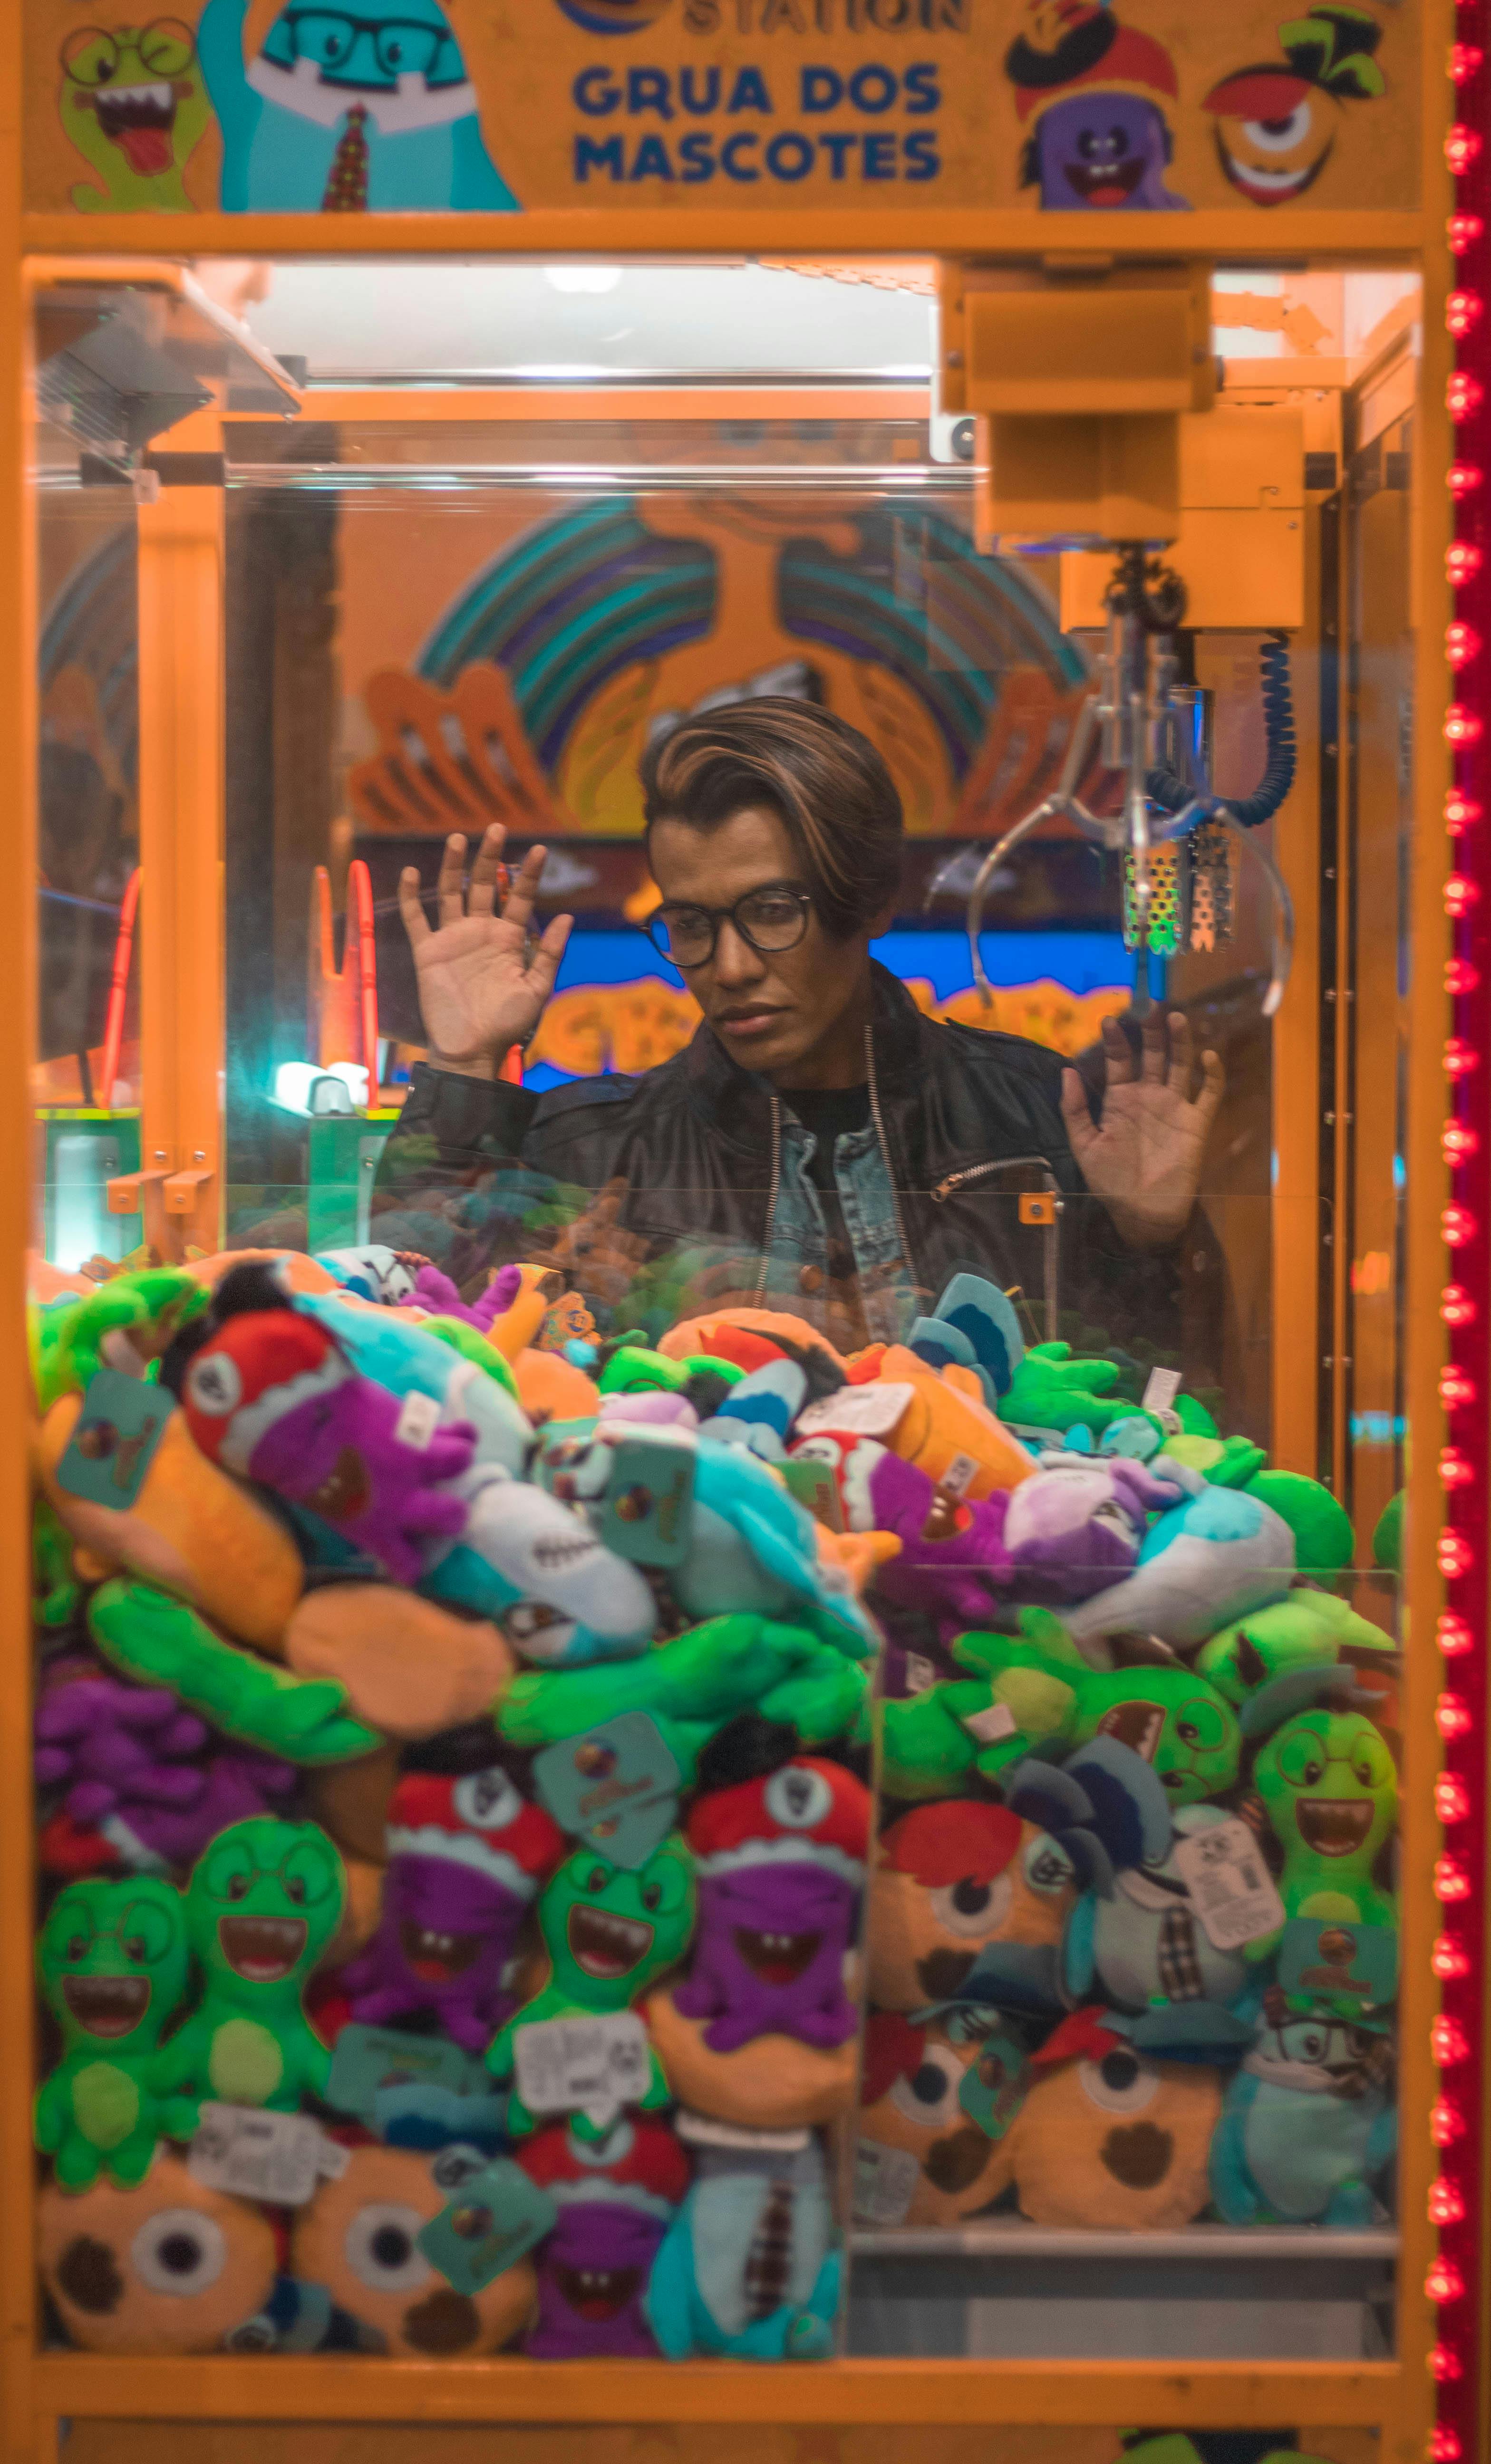 stylish guy choosing plush toy in crane machine